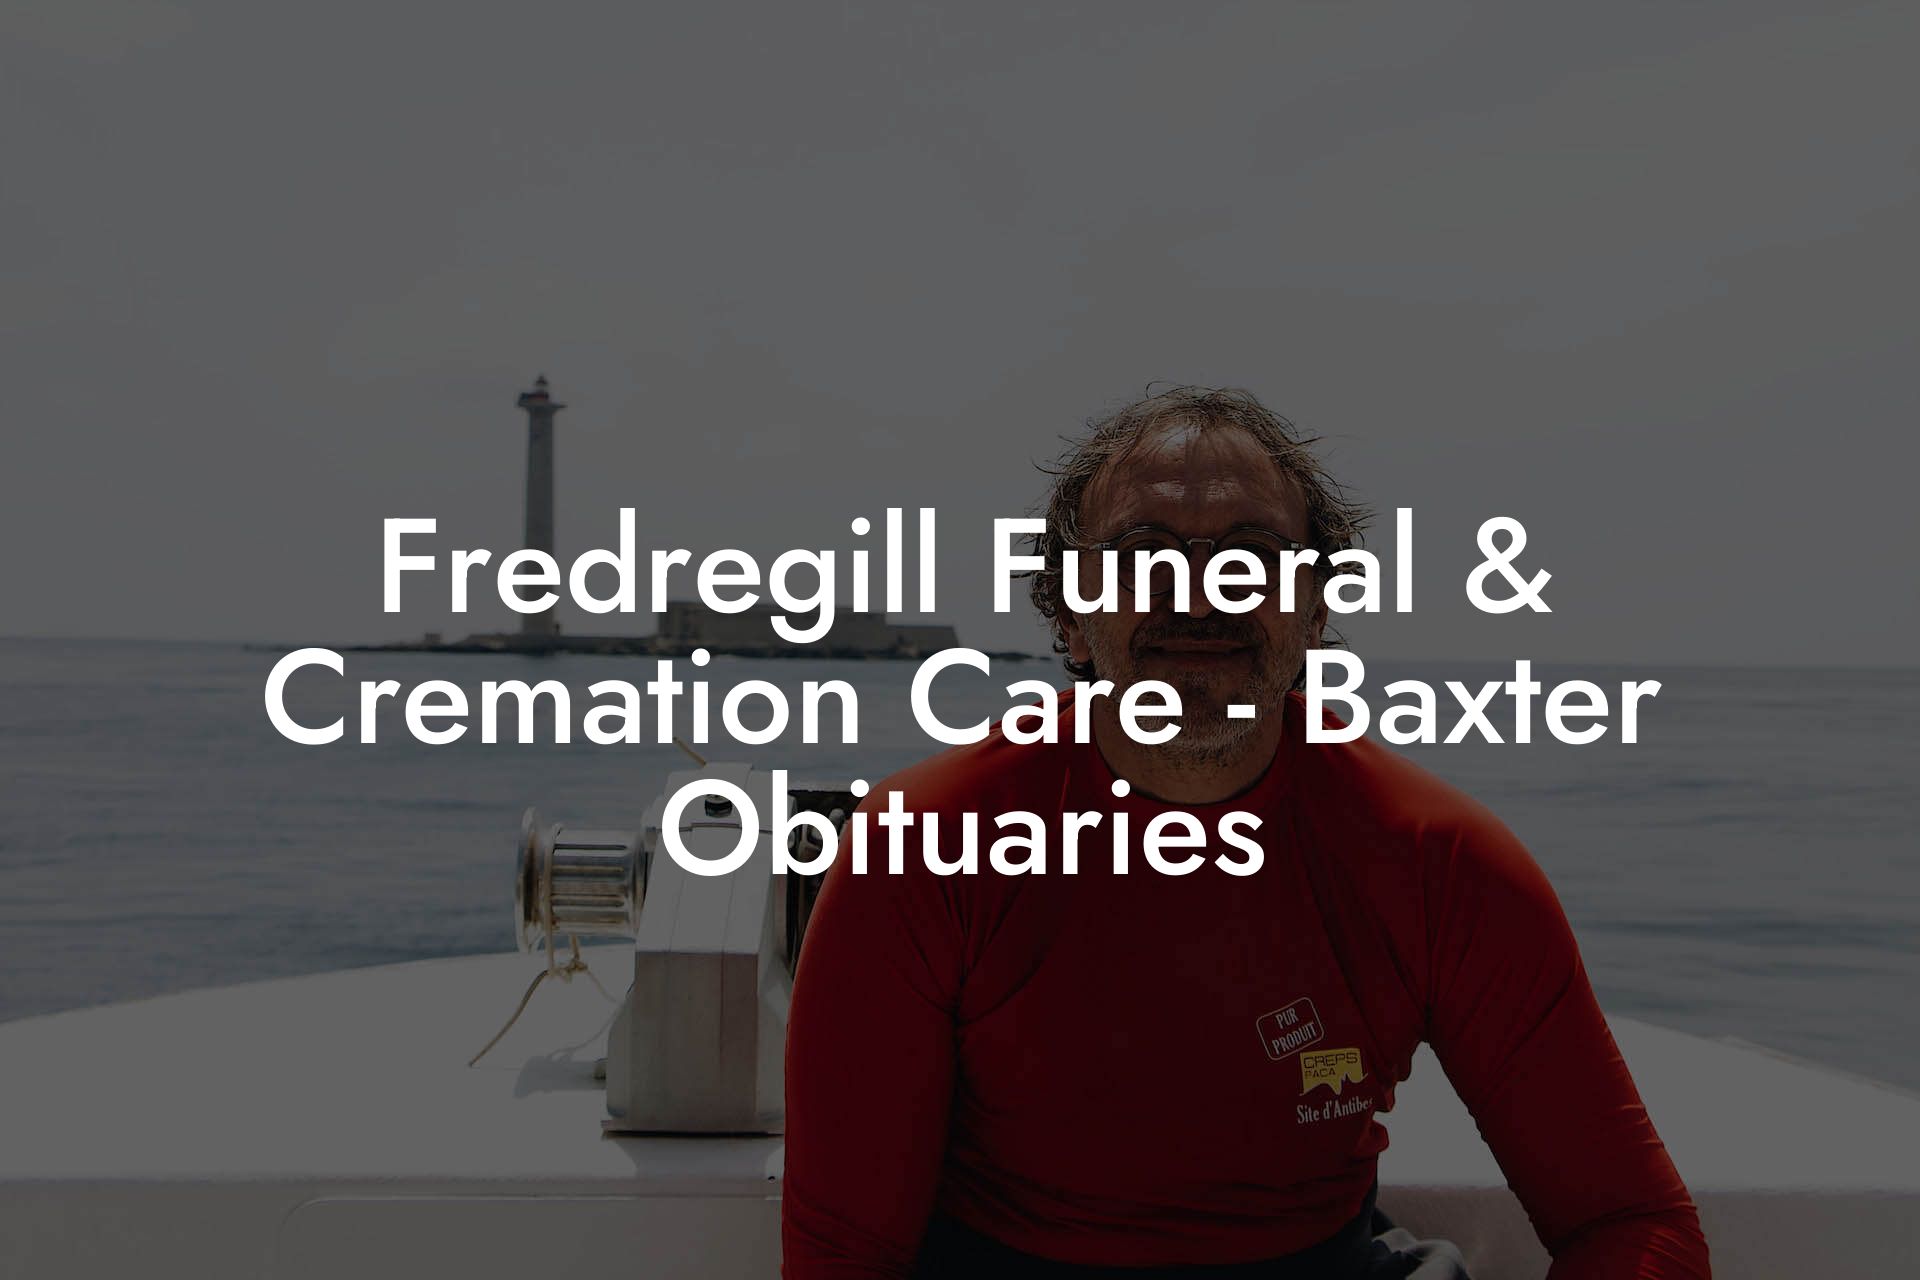 Fredregill Funeral & Cremation Care - Baxter Obituaries